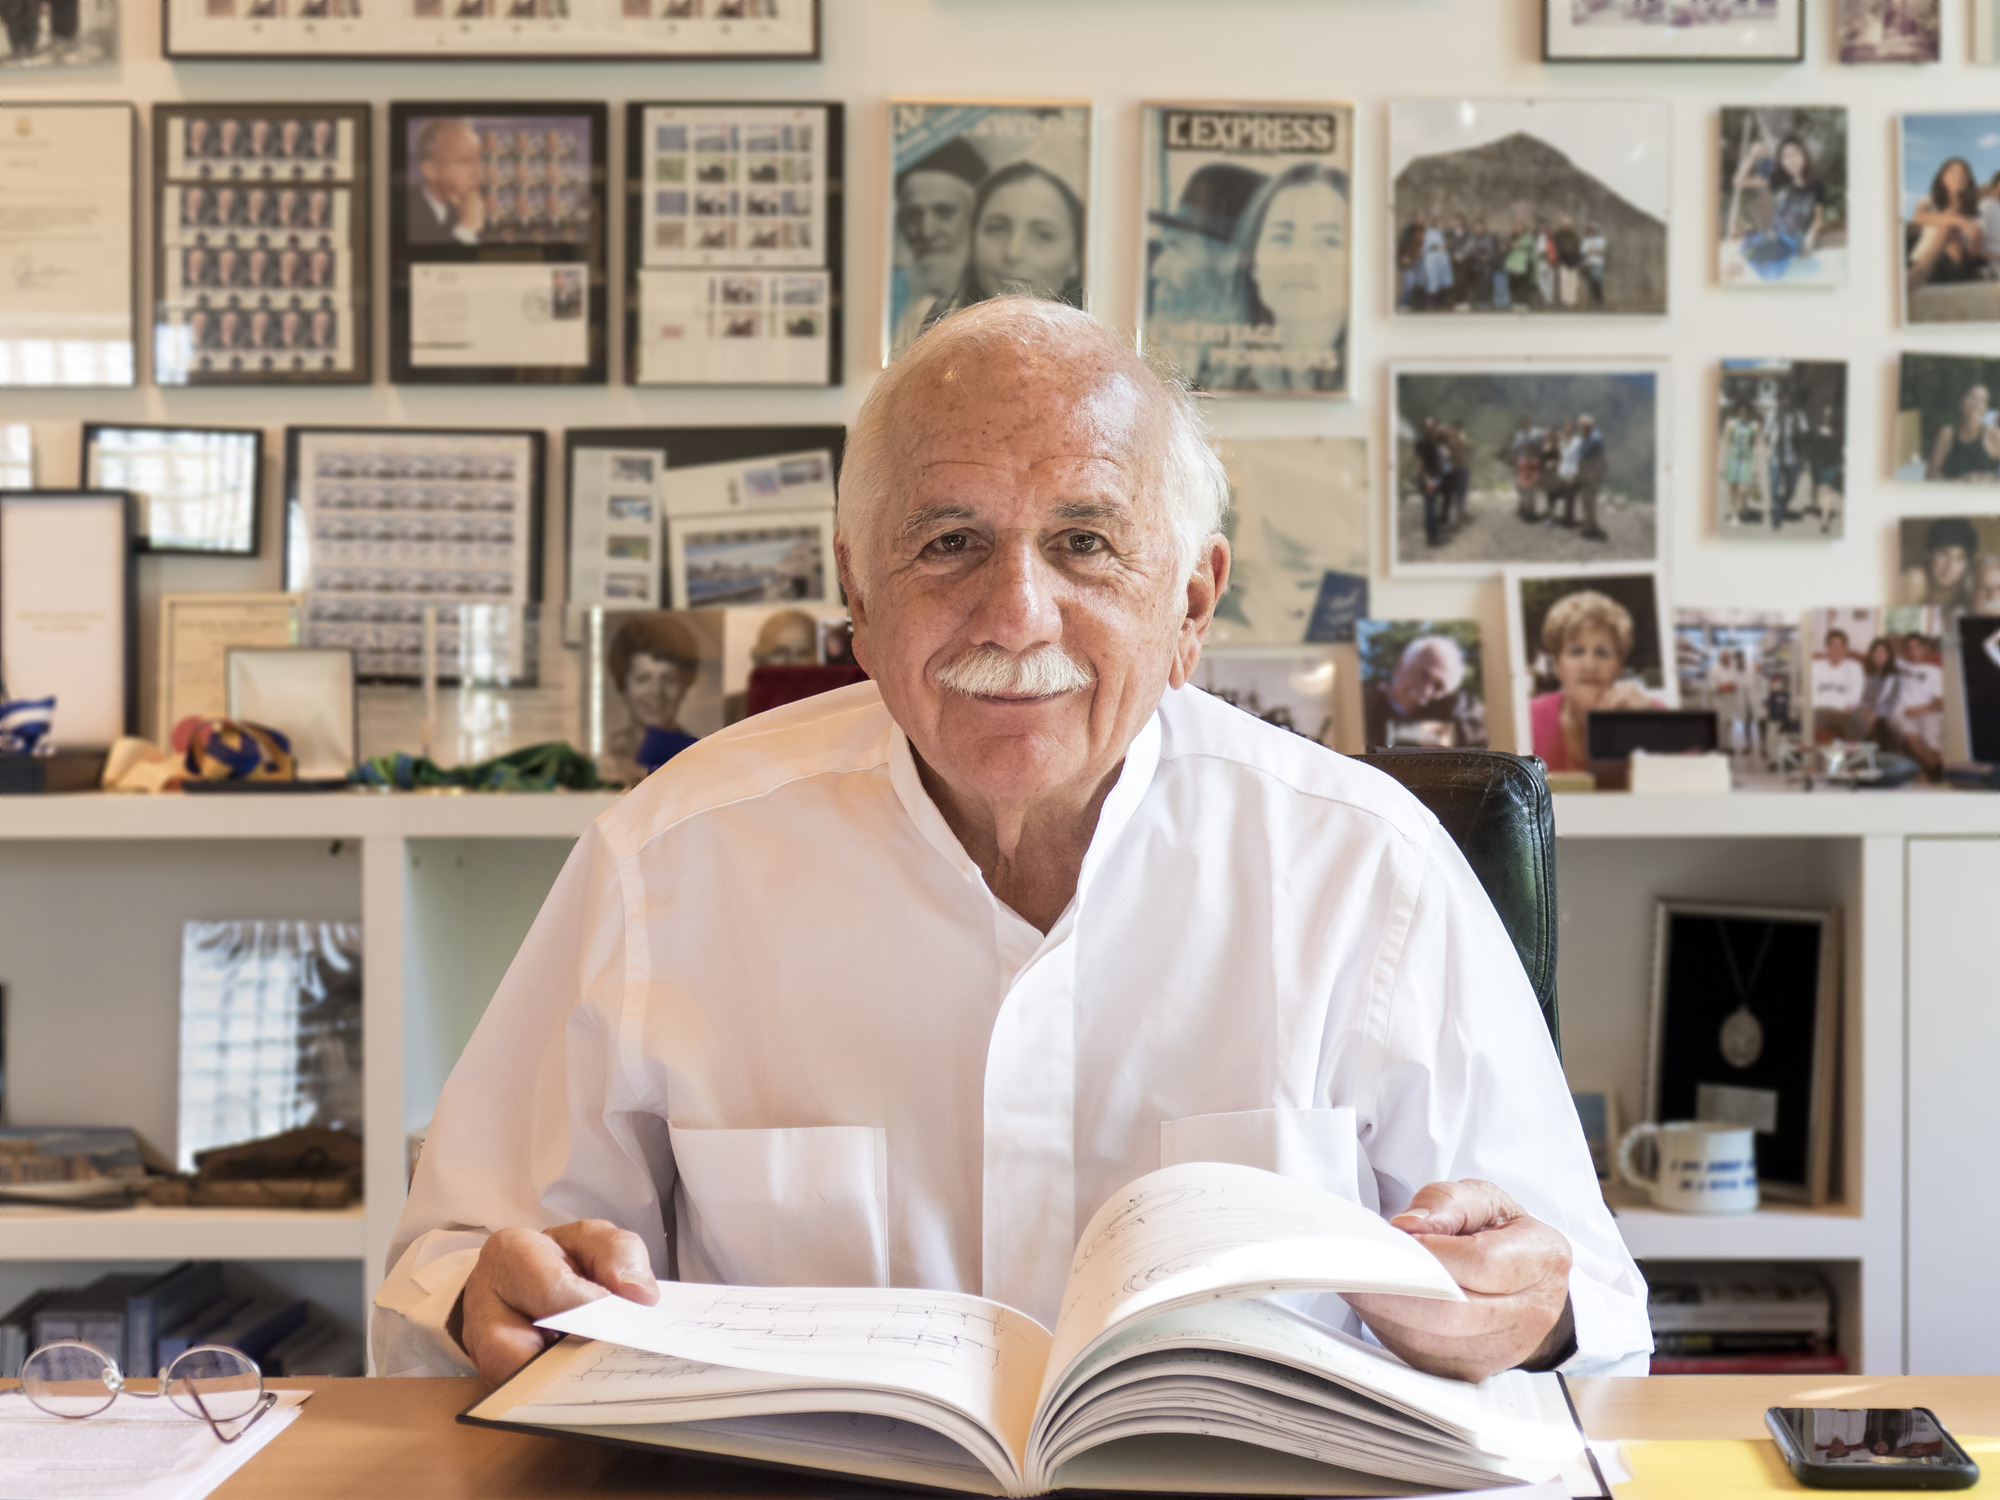 Architect & Author, Moshe Safdie